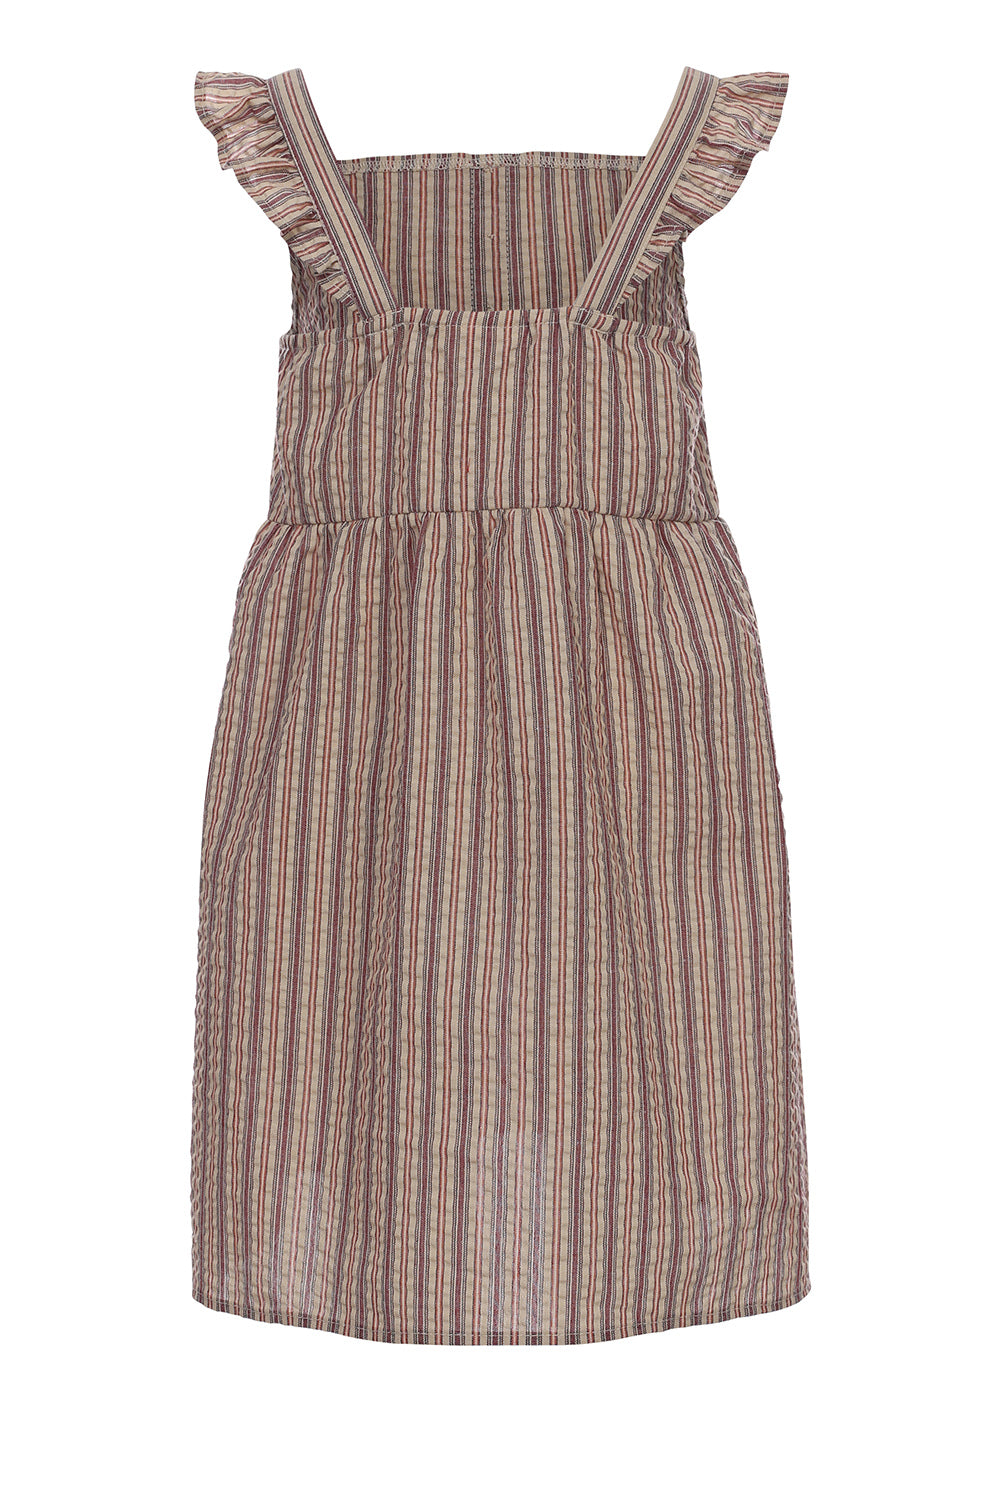 LOOXS Little Striped Woven Dress